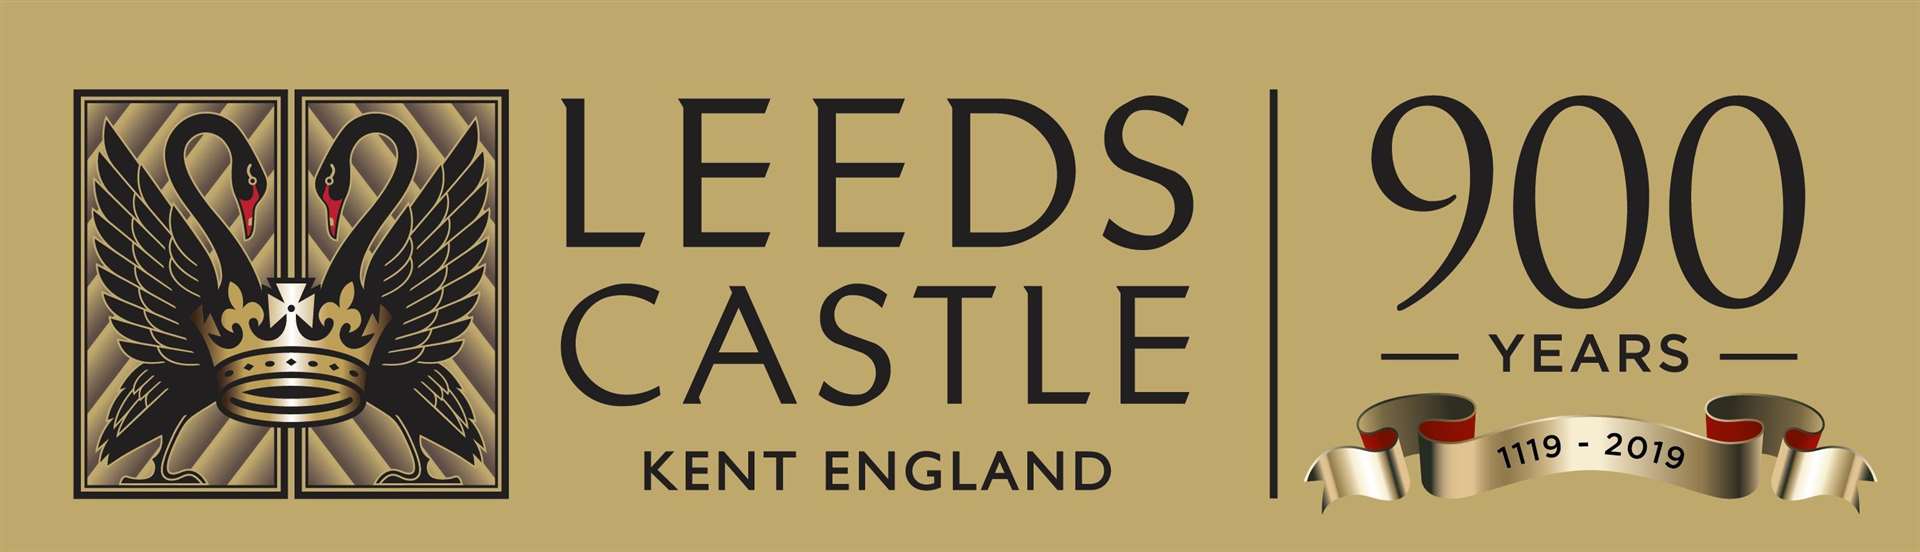 Leeds Castle 900